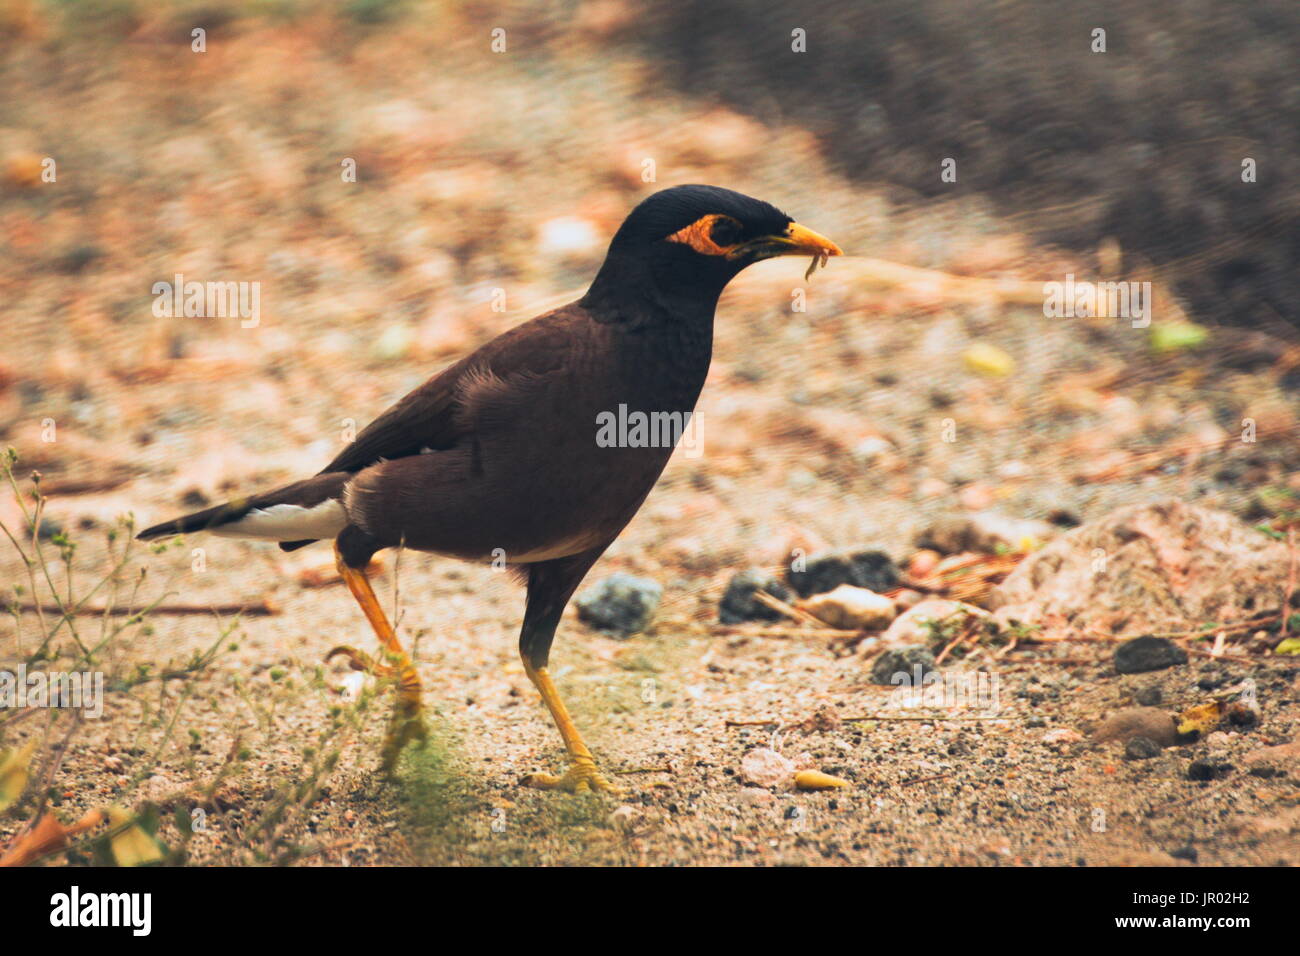 Black bird with a yellow beak having its meal Stock Photo